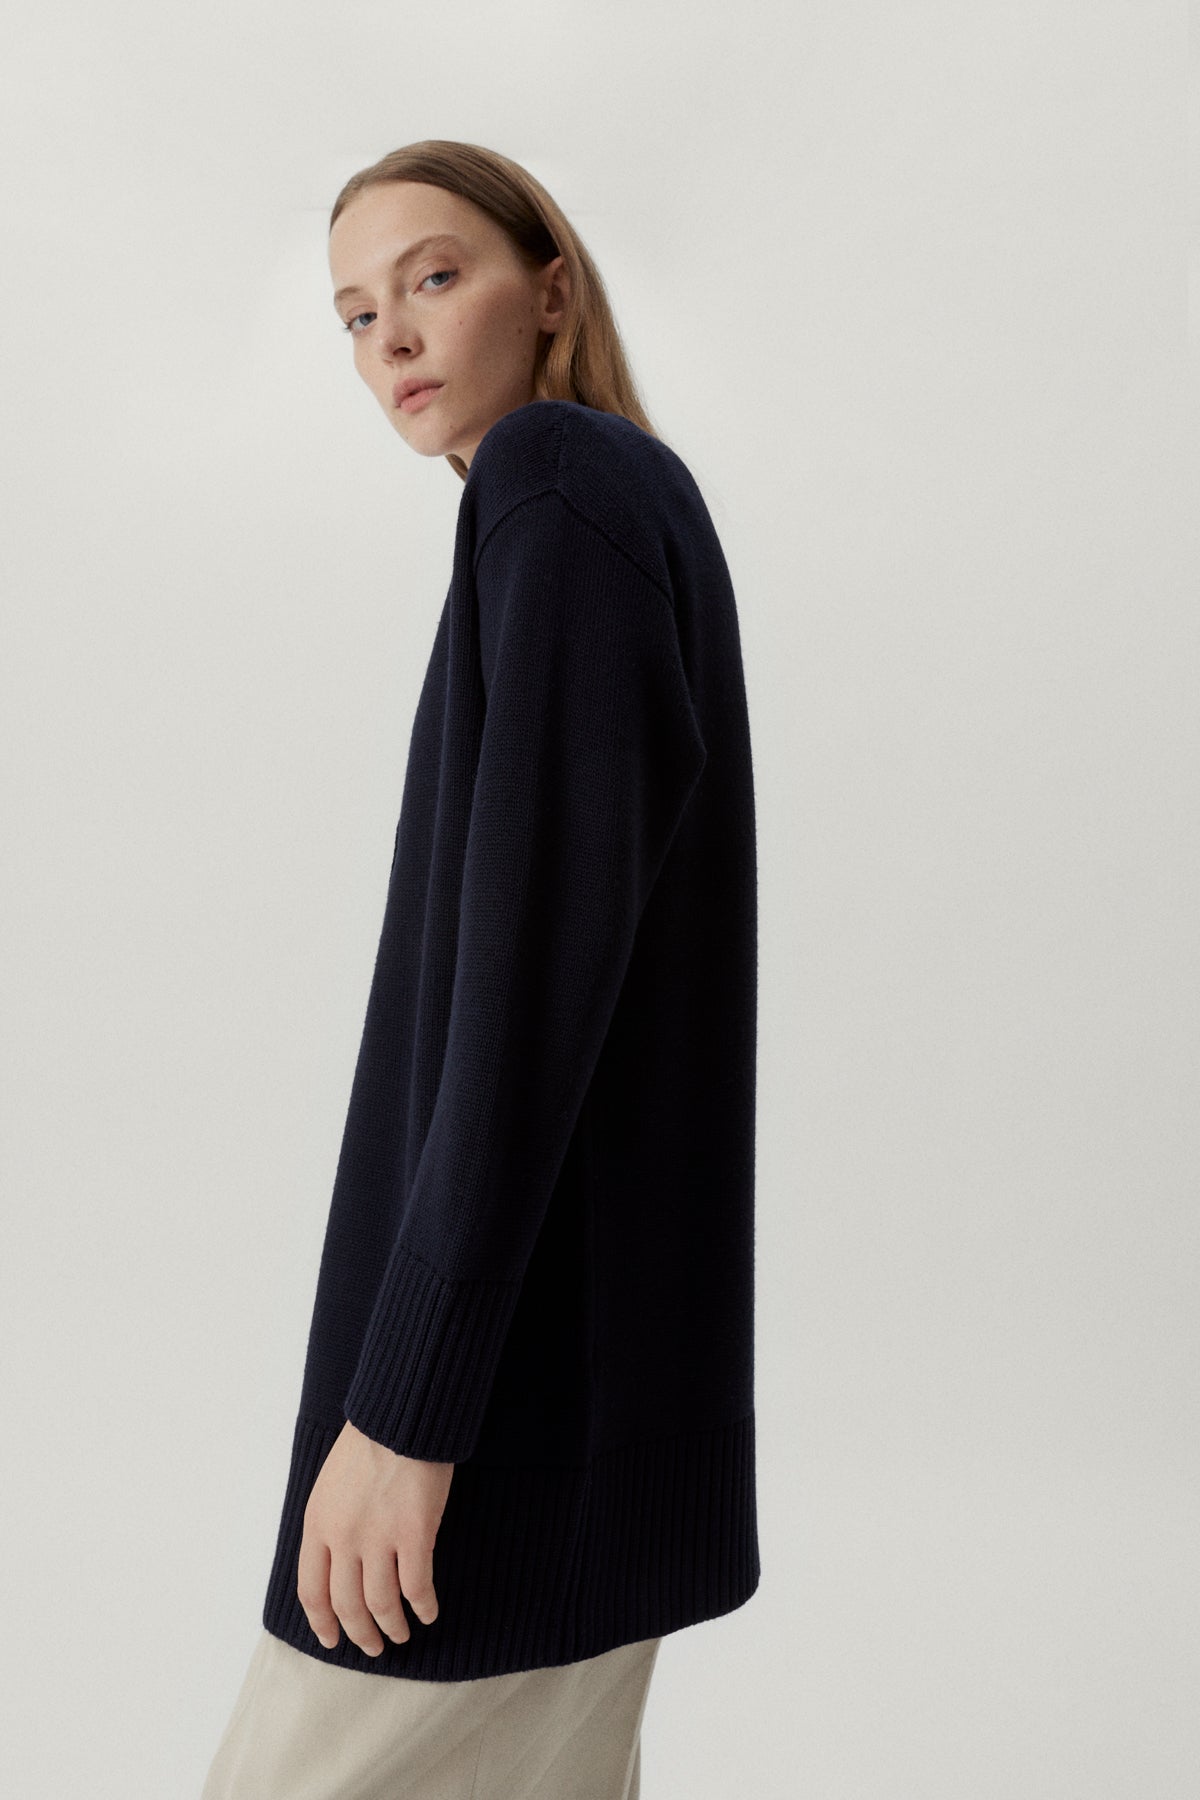 Oxford Blue | The Merino Wool Oversize Cardigan